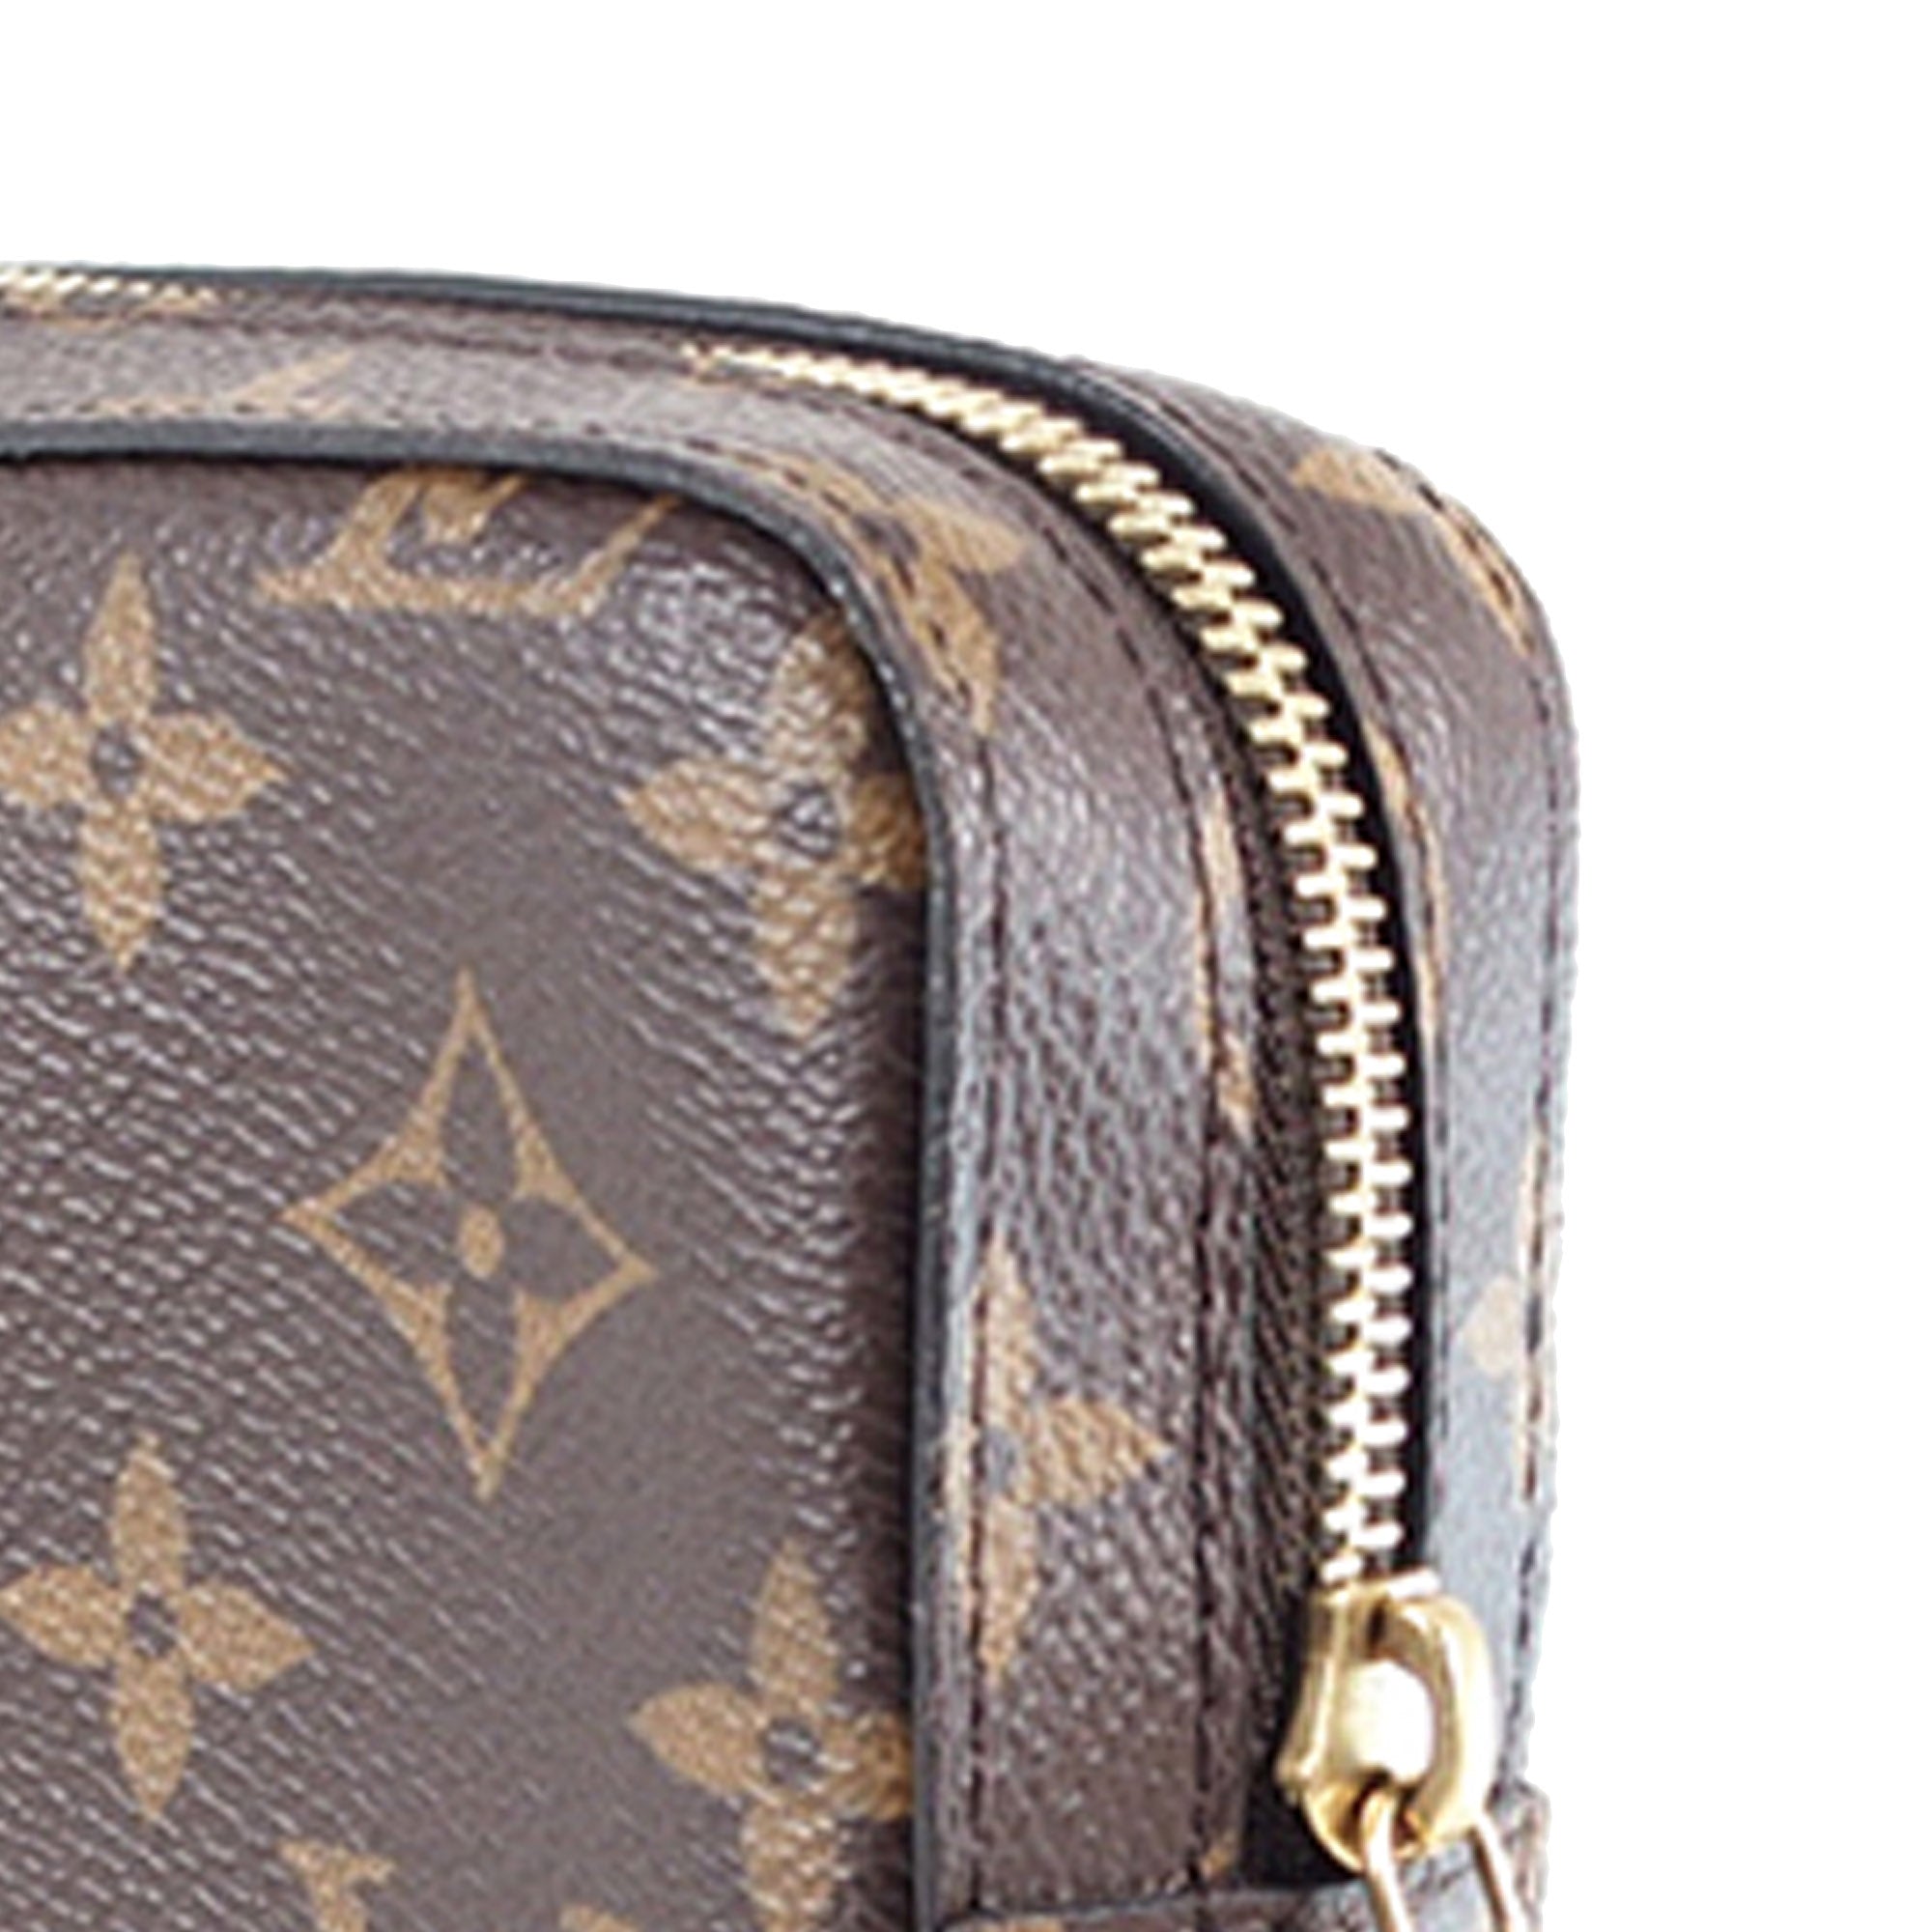 Brown Louis Vuitton Monogram Soft Trunk Pouch Clutch Bag